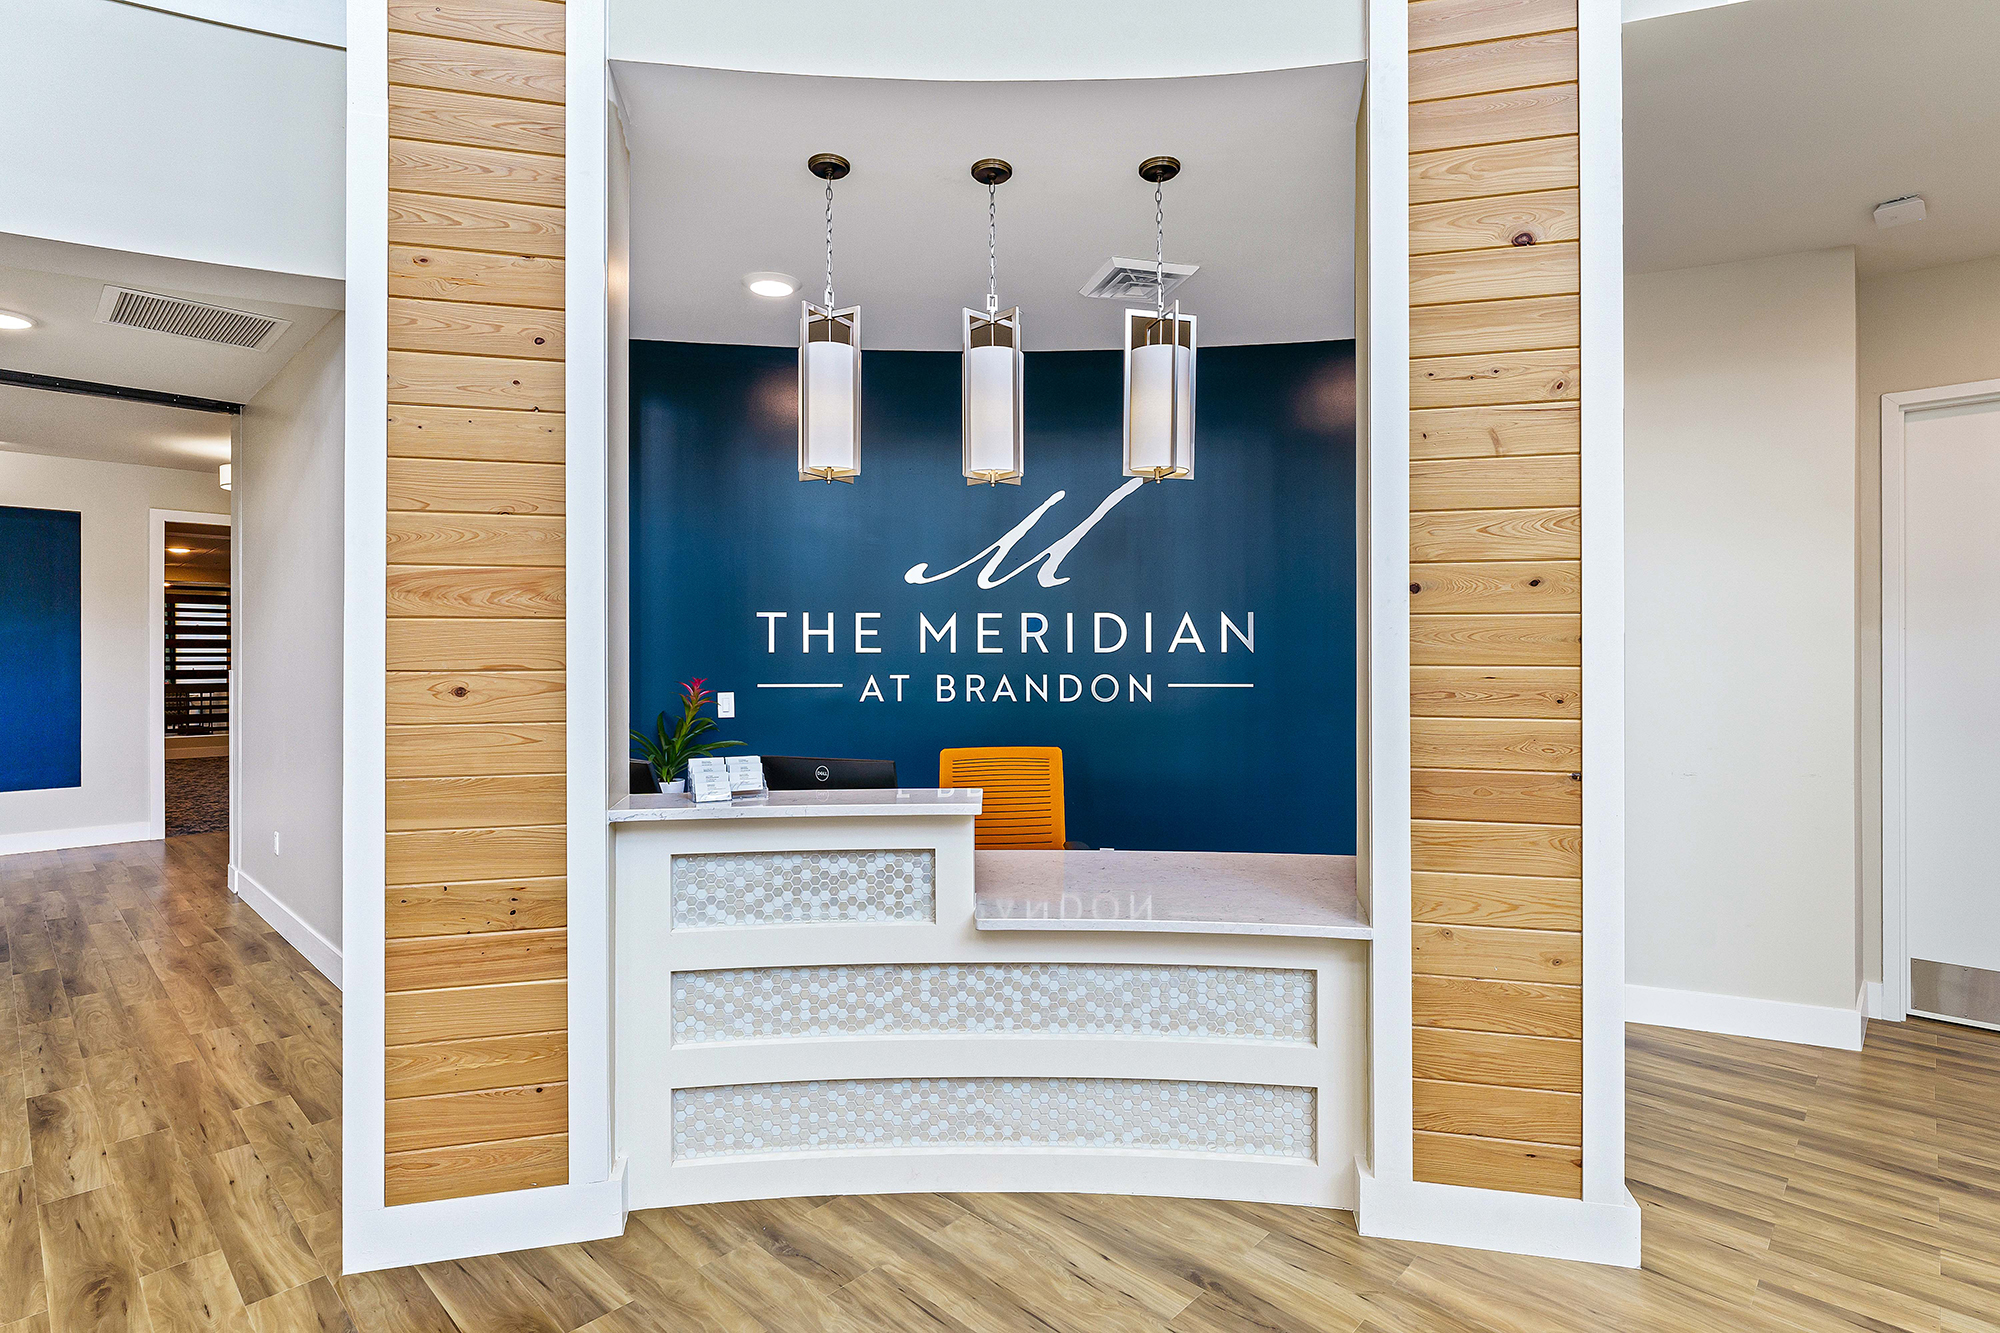 The Meridian at Brandon image